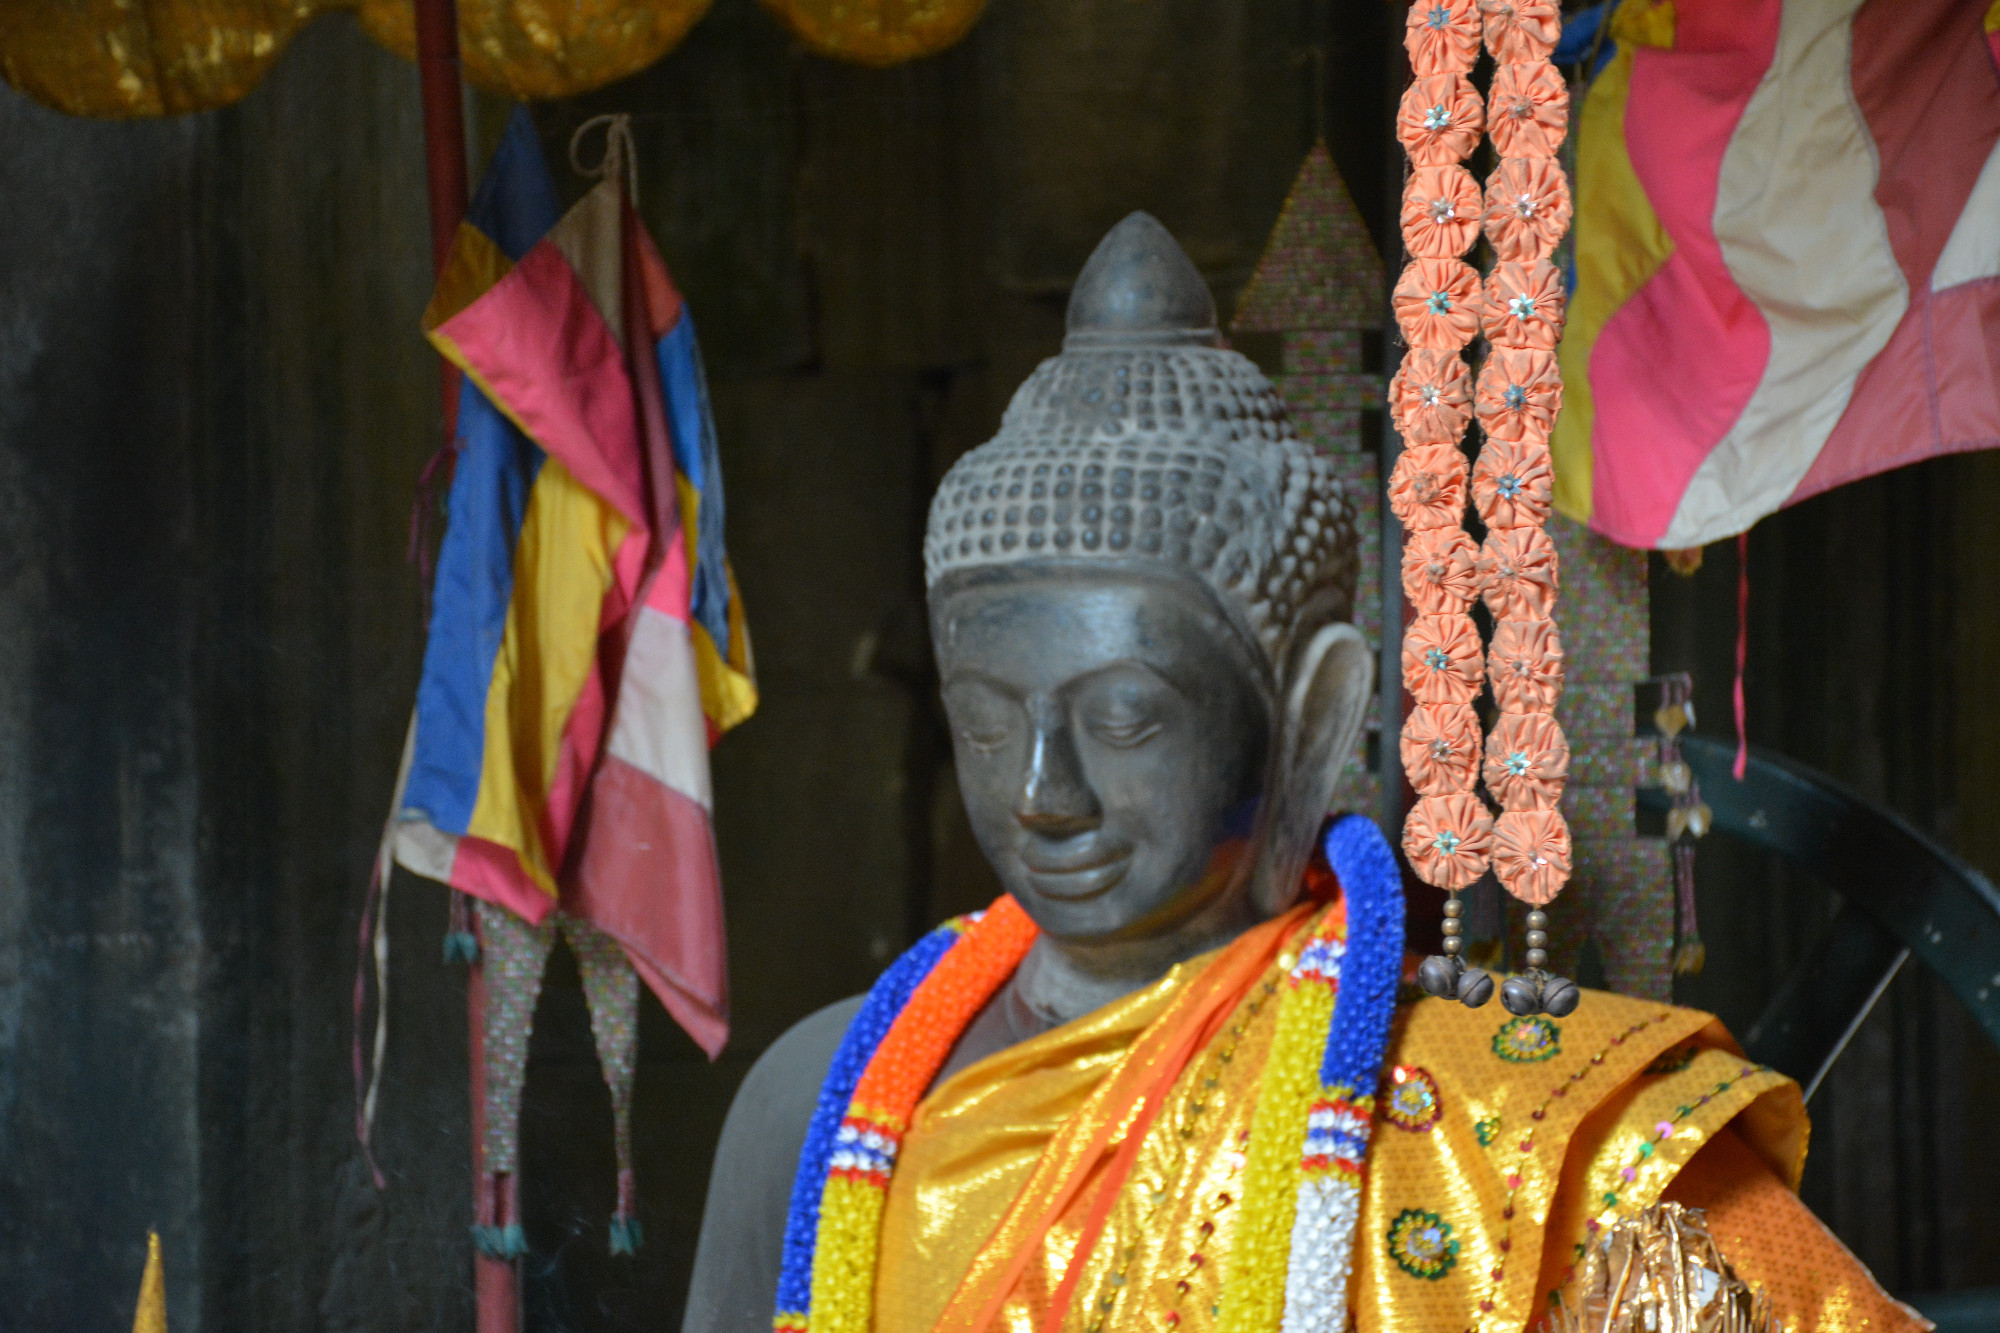 Buddha figure dressed for prayer